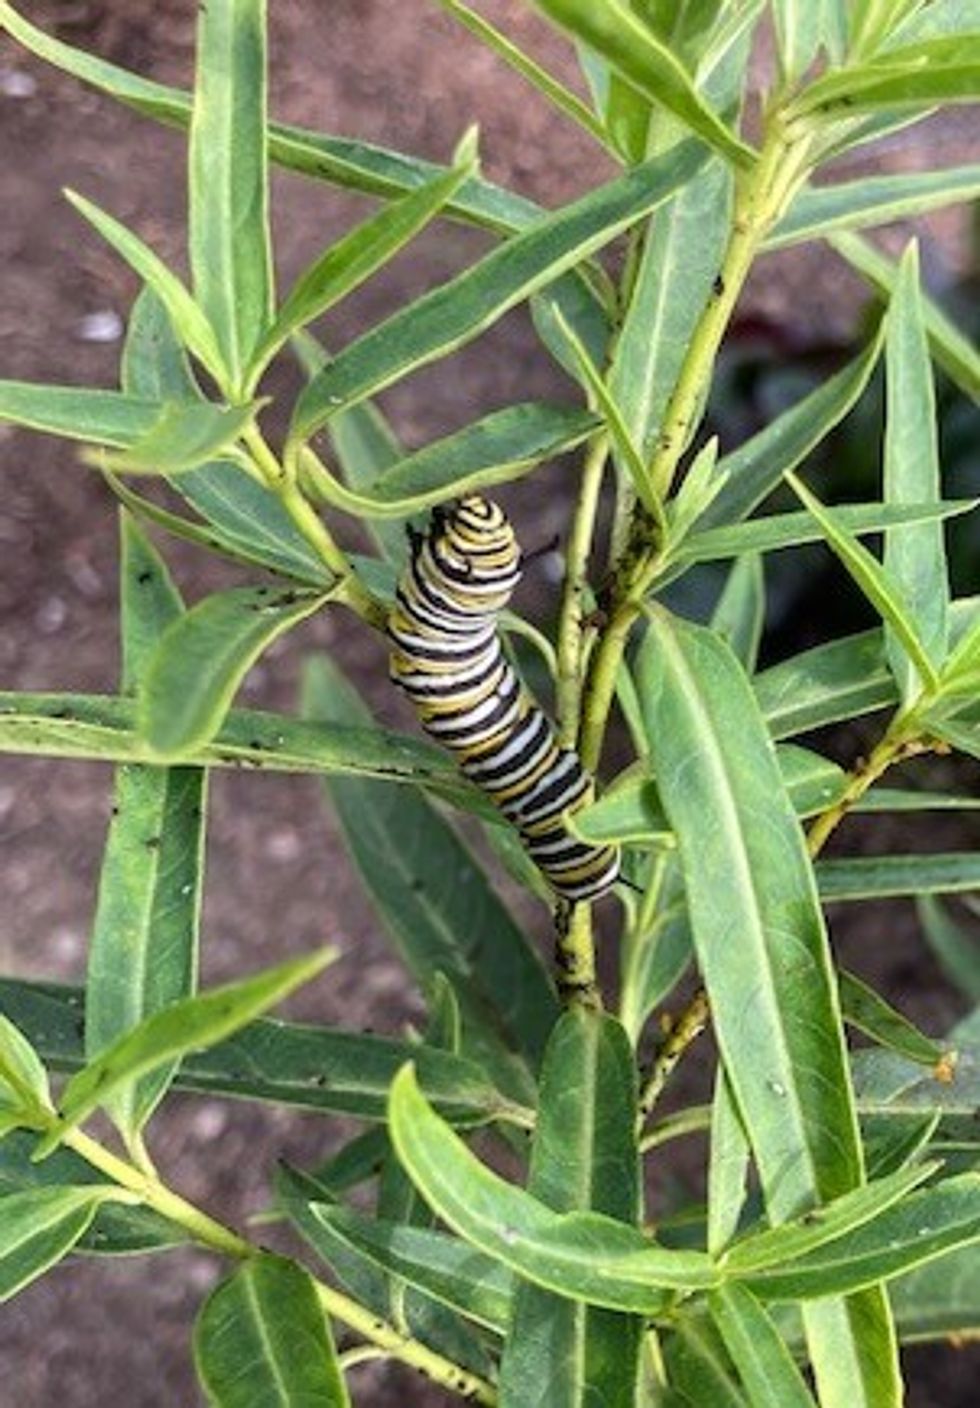 Endangered Monarch caterpillars sighted at pollinator garden